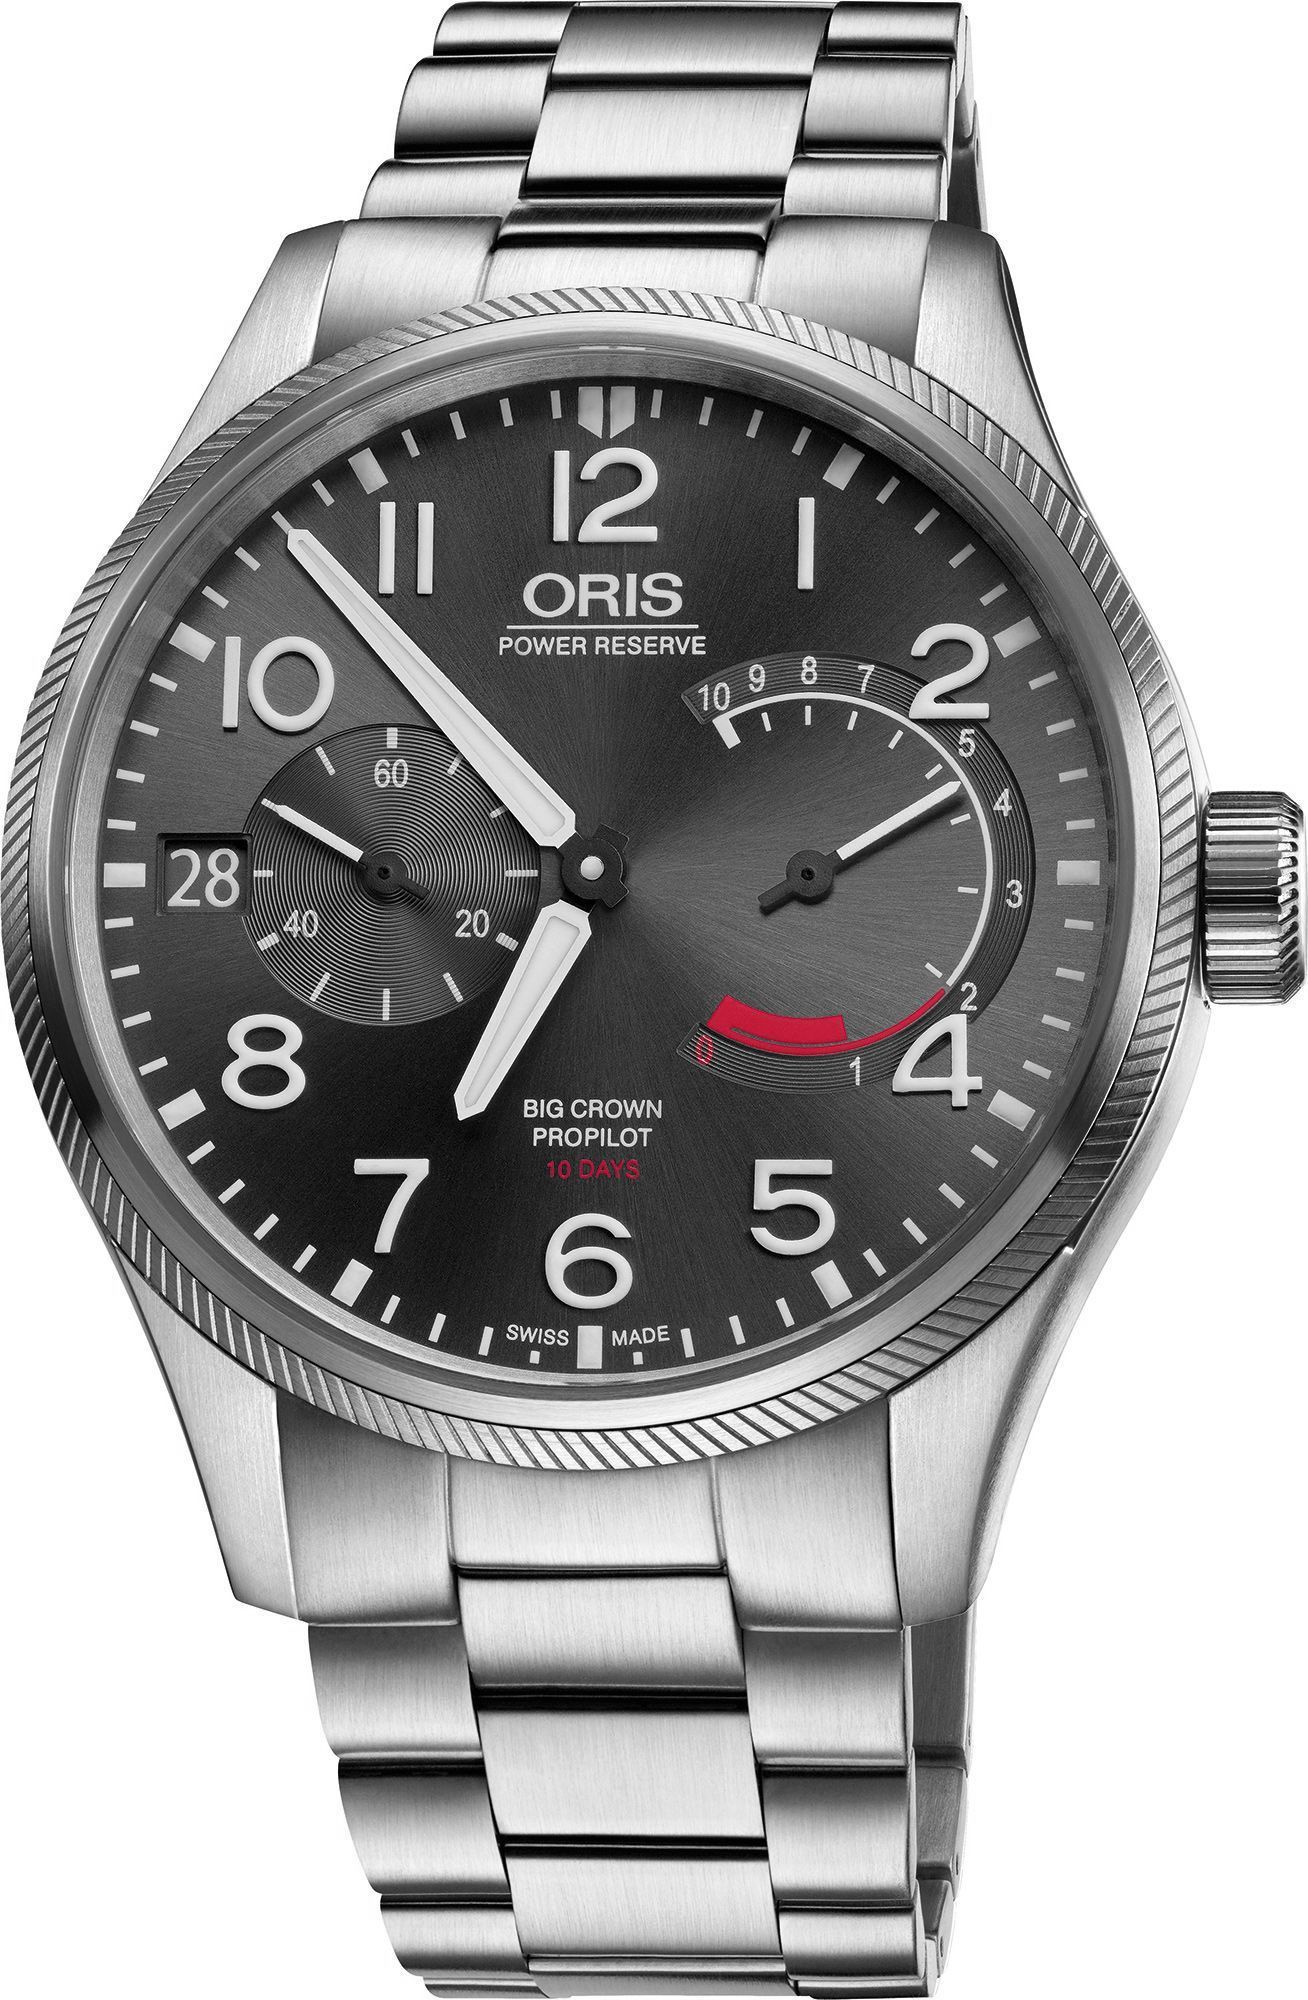 Oris ProPilot Big Crown ProPilot Calibre 111 Anthracite Dial 44 mm Manual Winding Watch For Men - 1